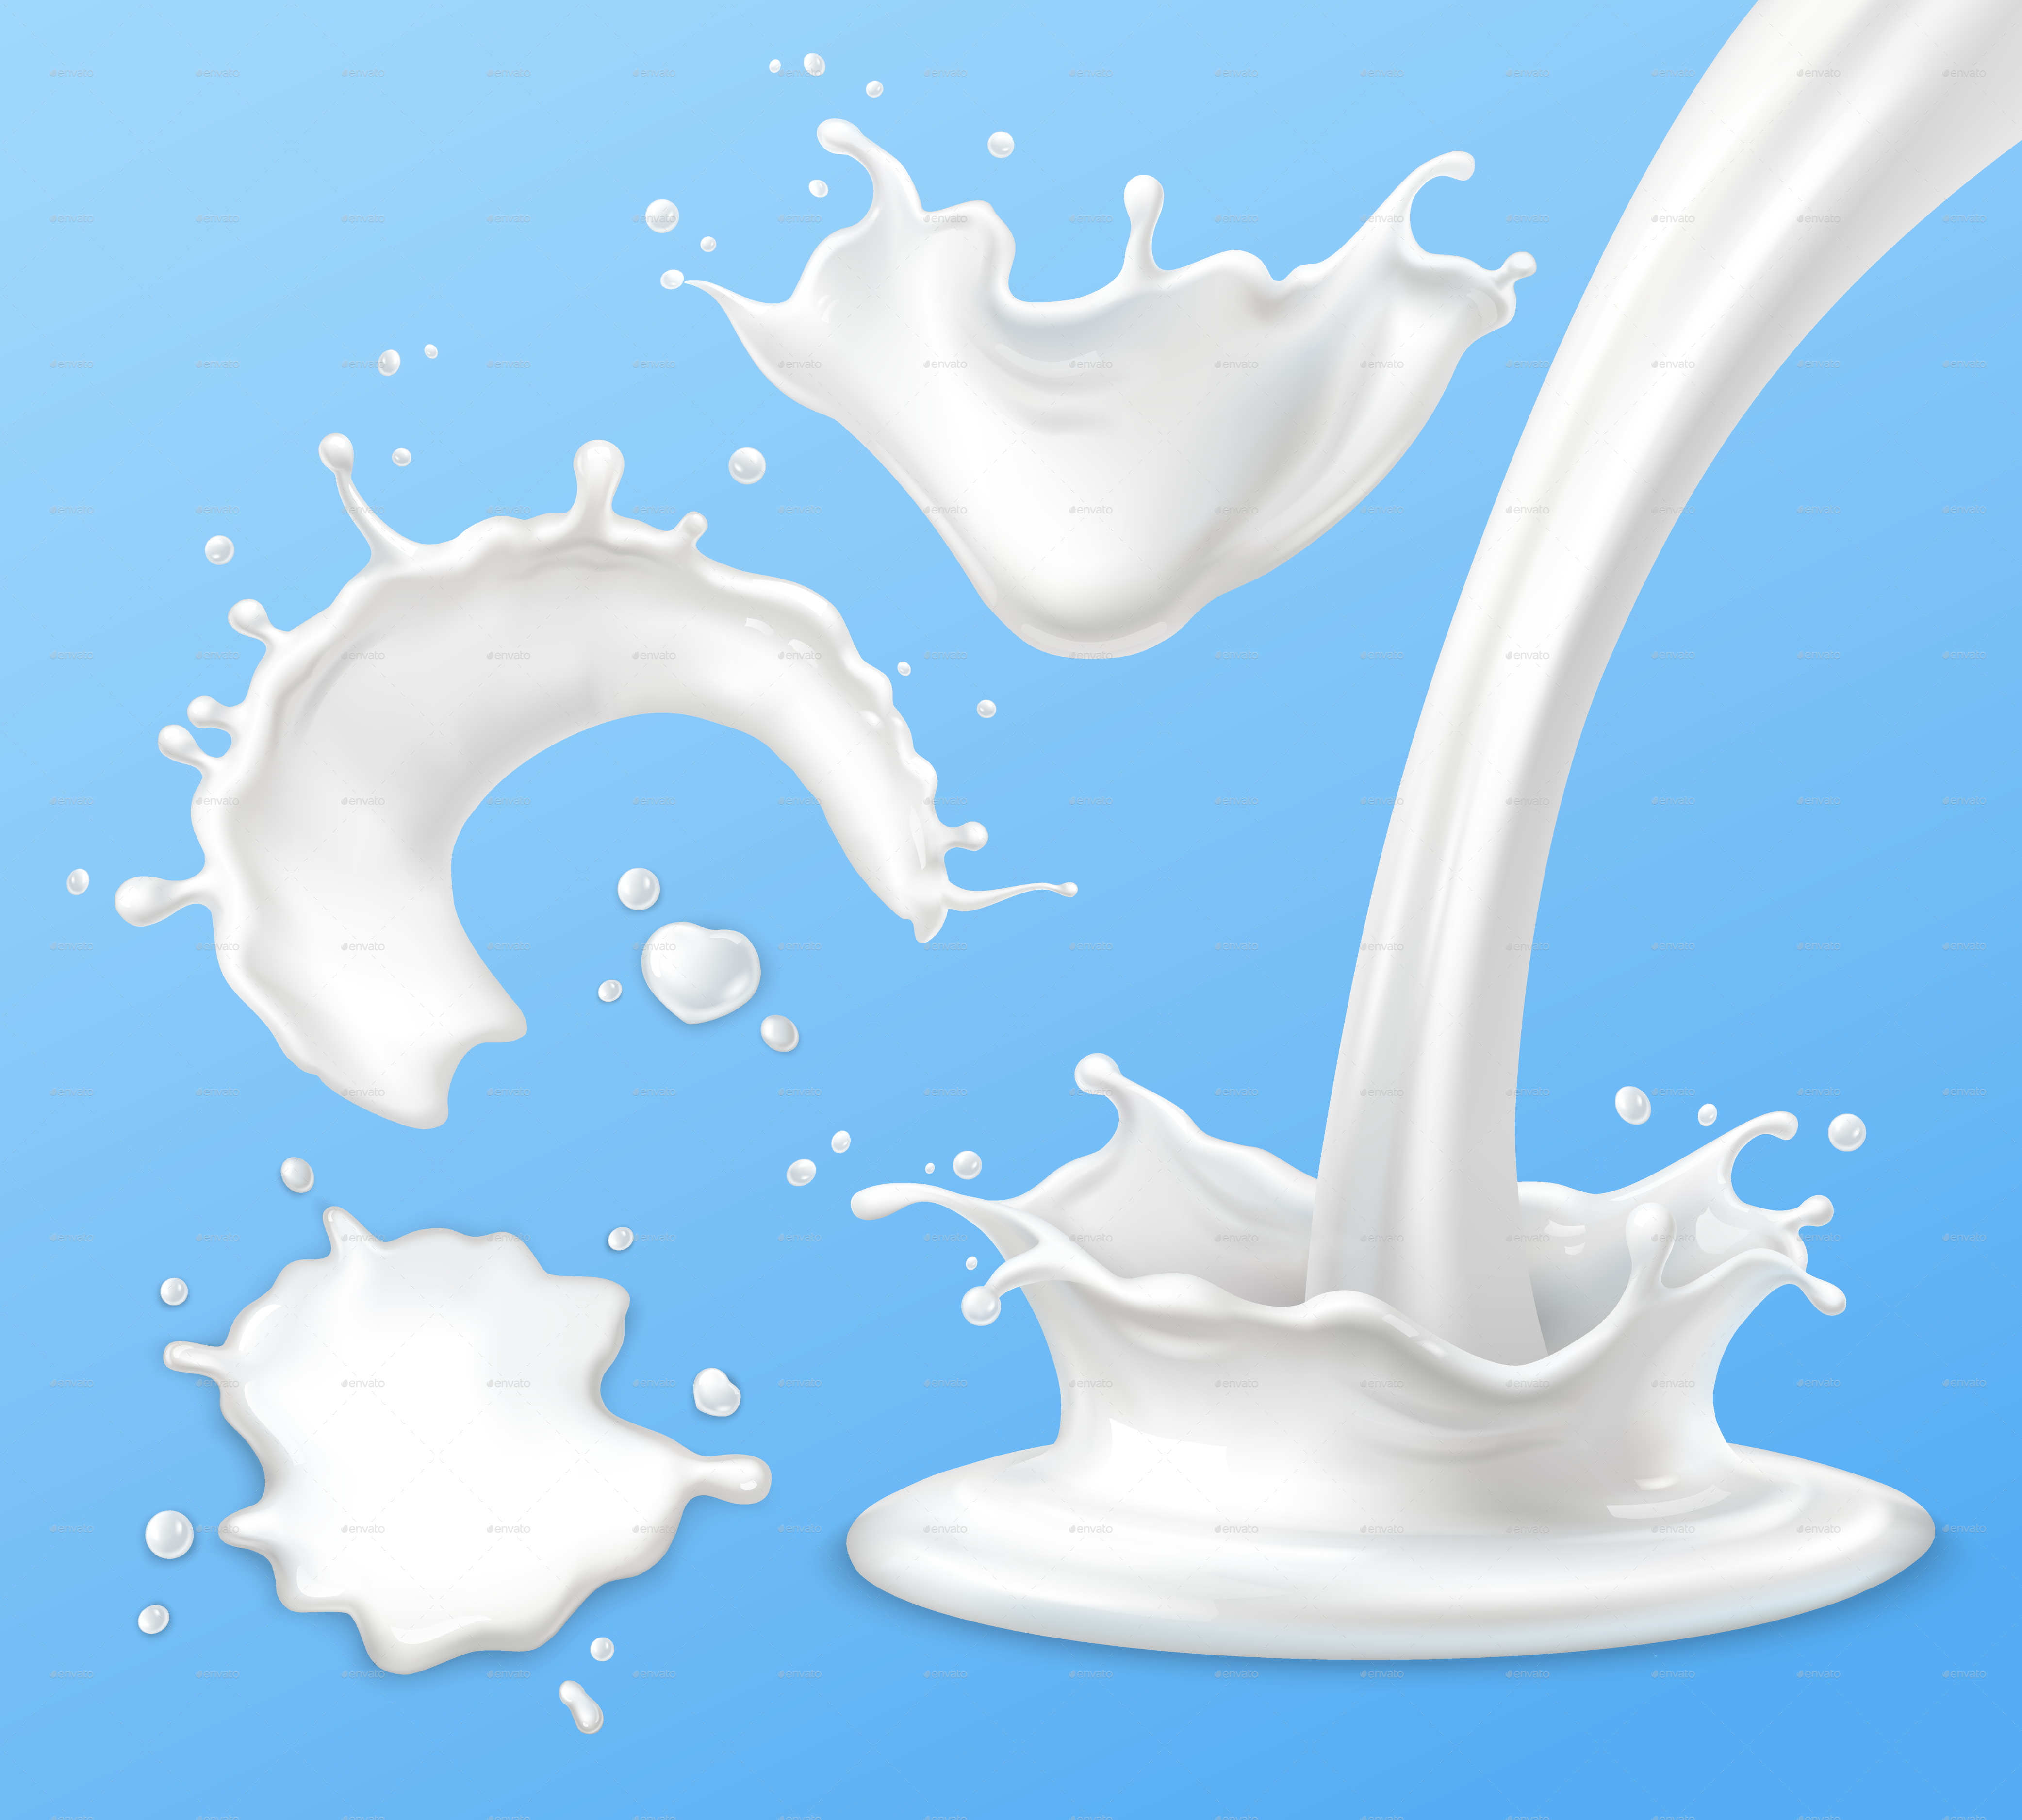 Milk Splashes, Drops and Blots by Mia_V | GraphicRiver